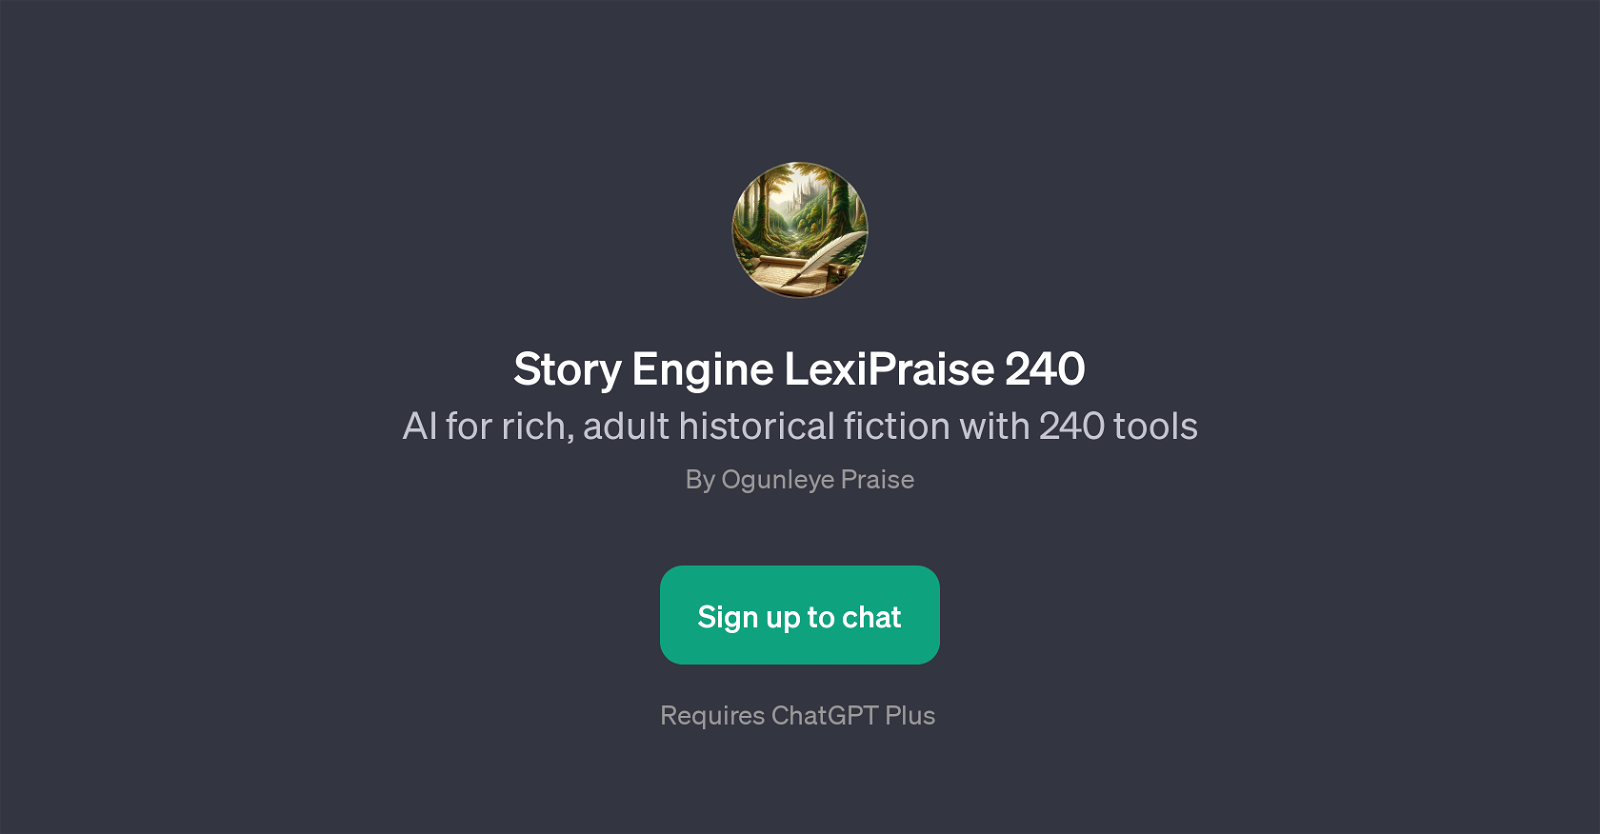 Story Engine LexiPraise 240 website